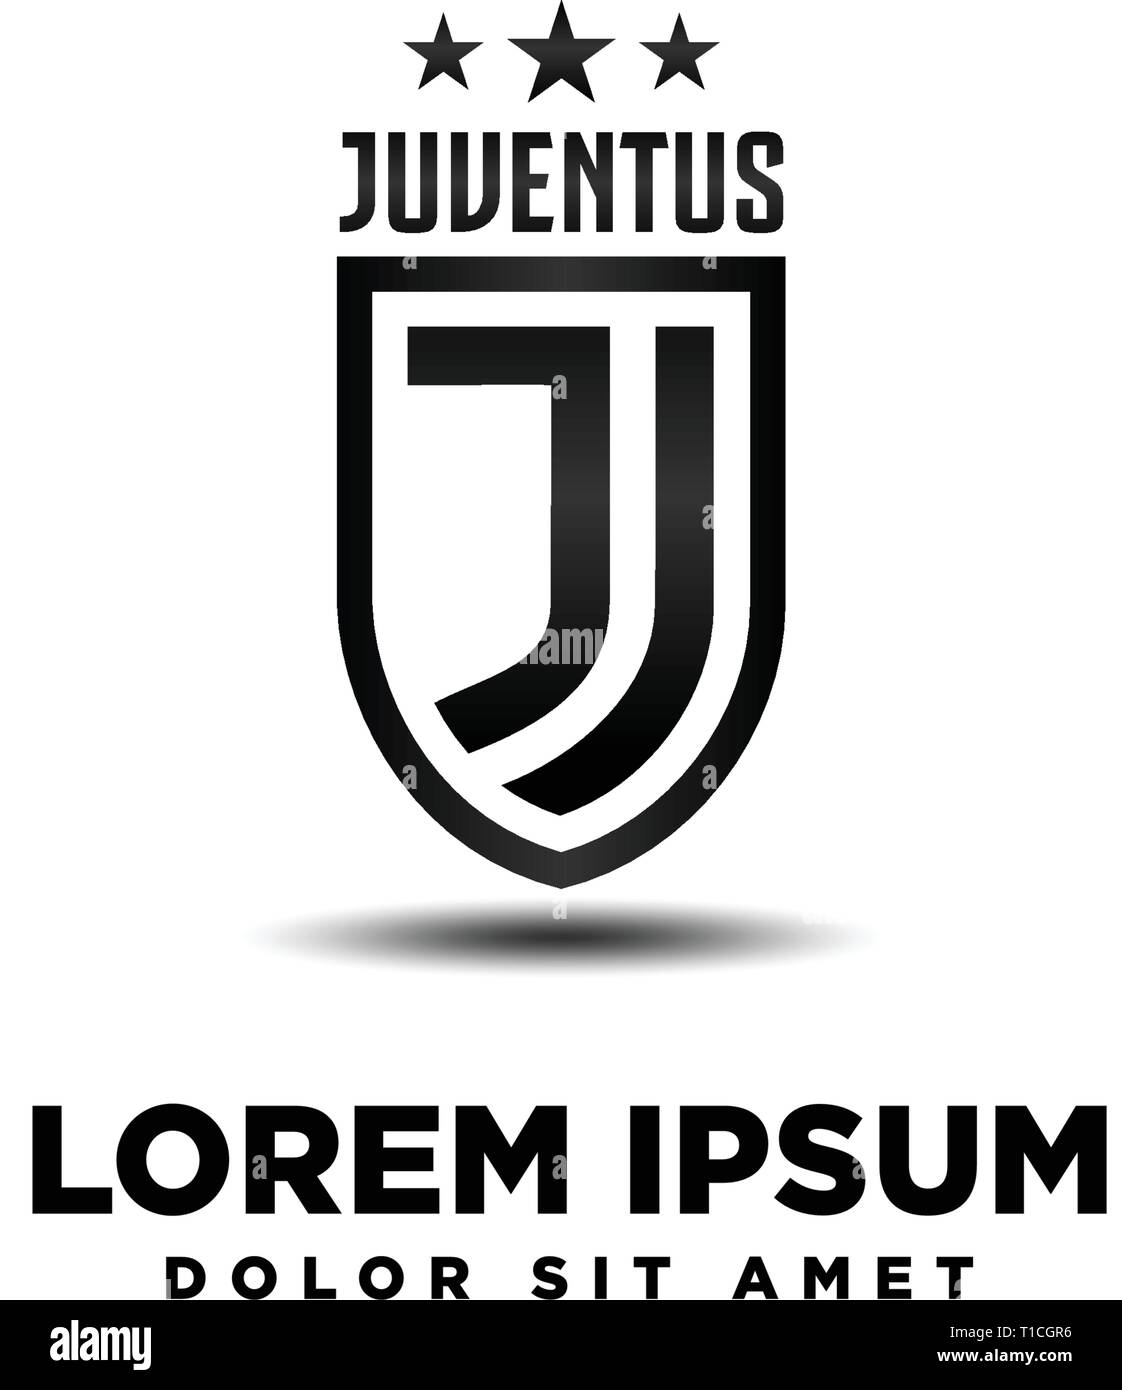 Juventus Logo Black And White Stock Photos Images Alamy